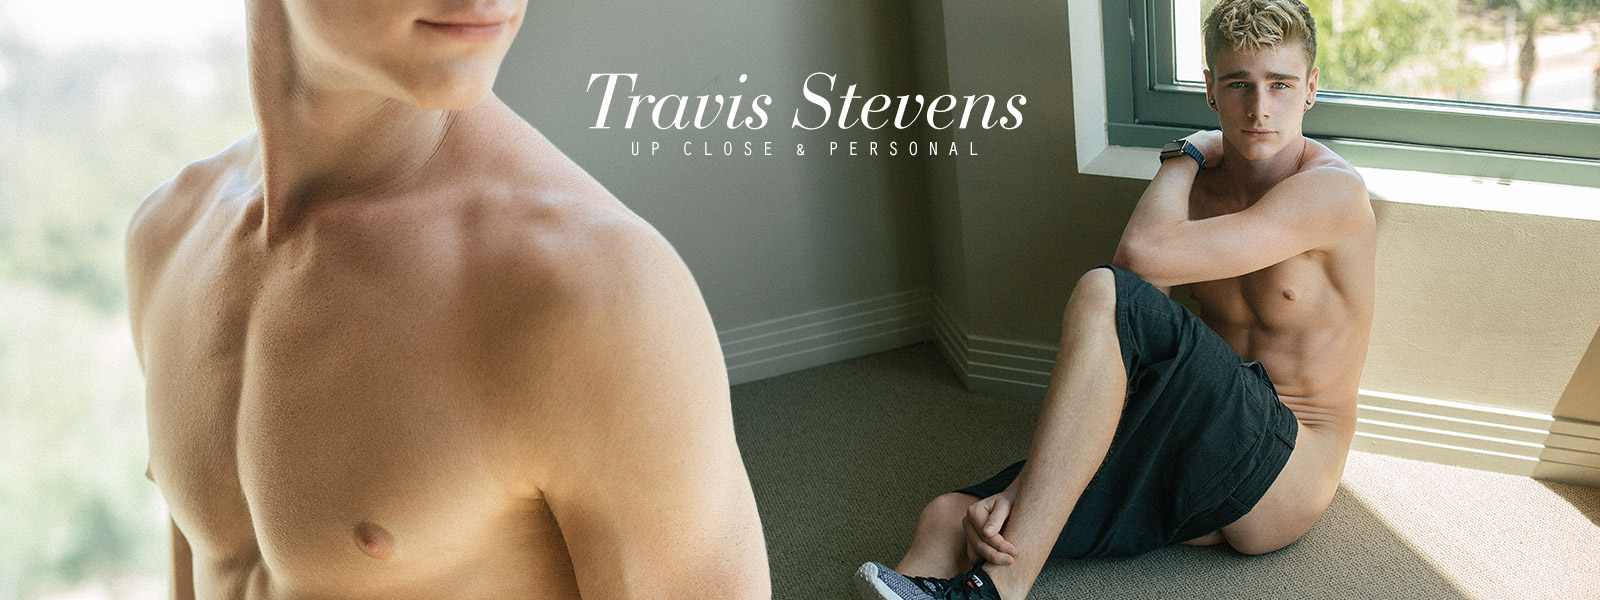 Travis Stevens Up Close & Personal. 